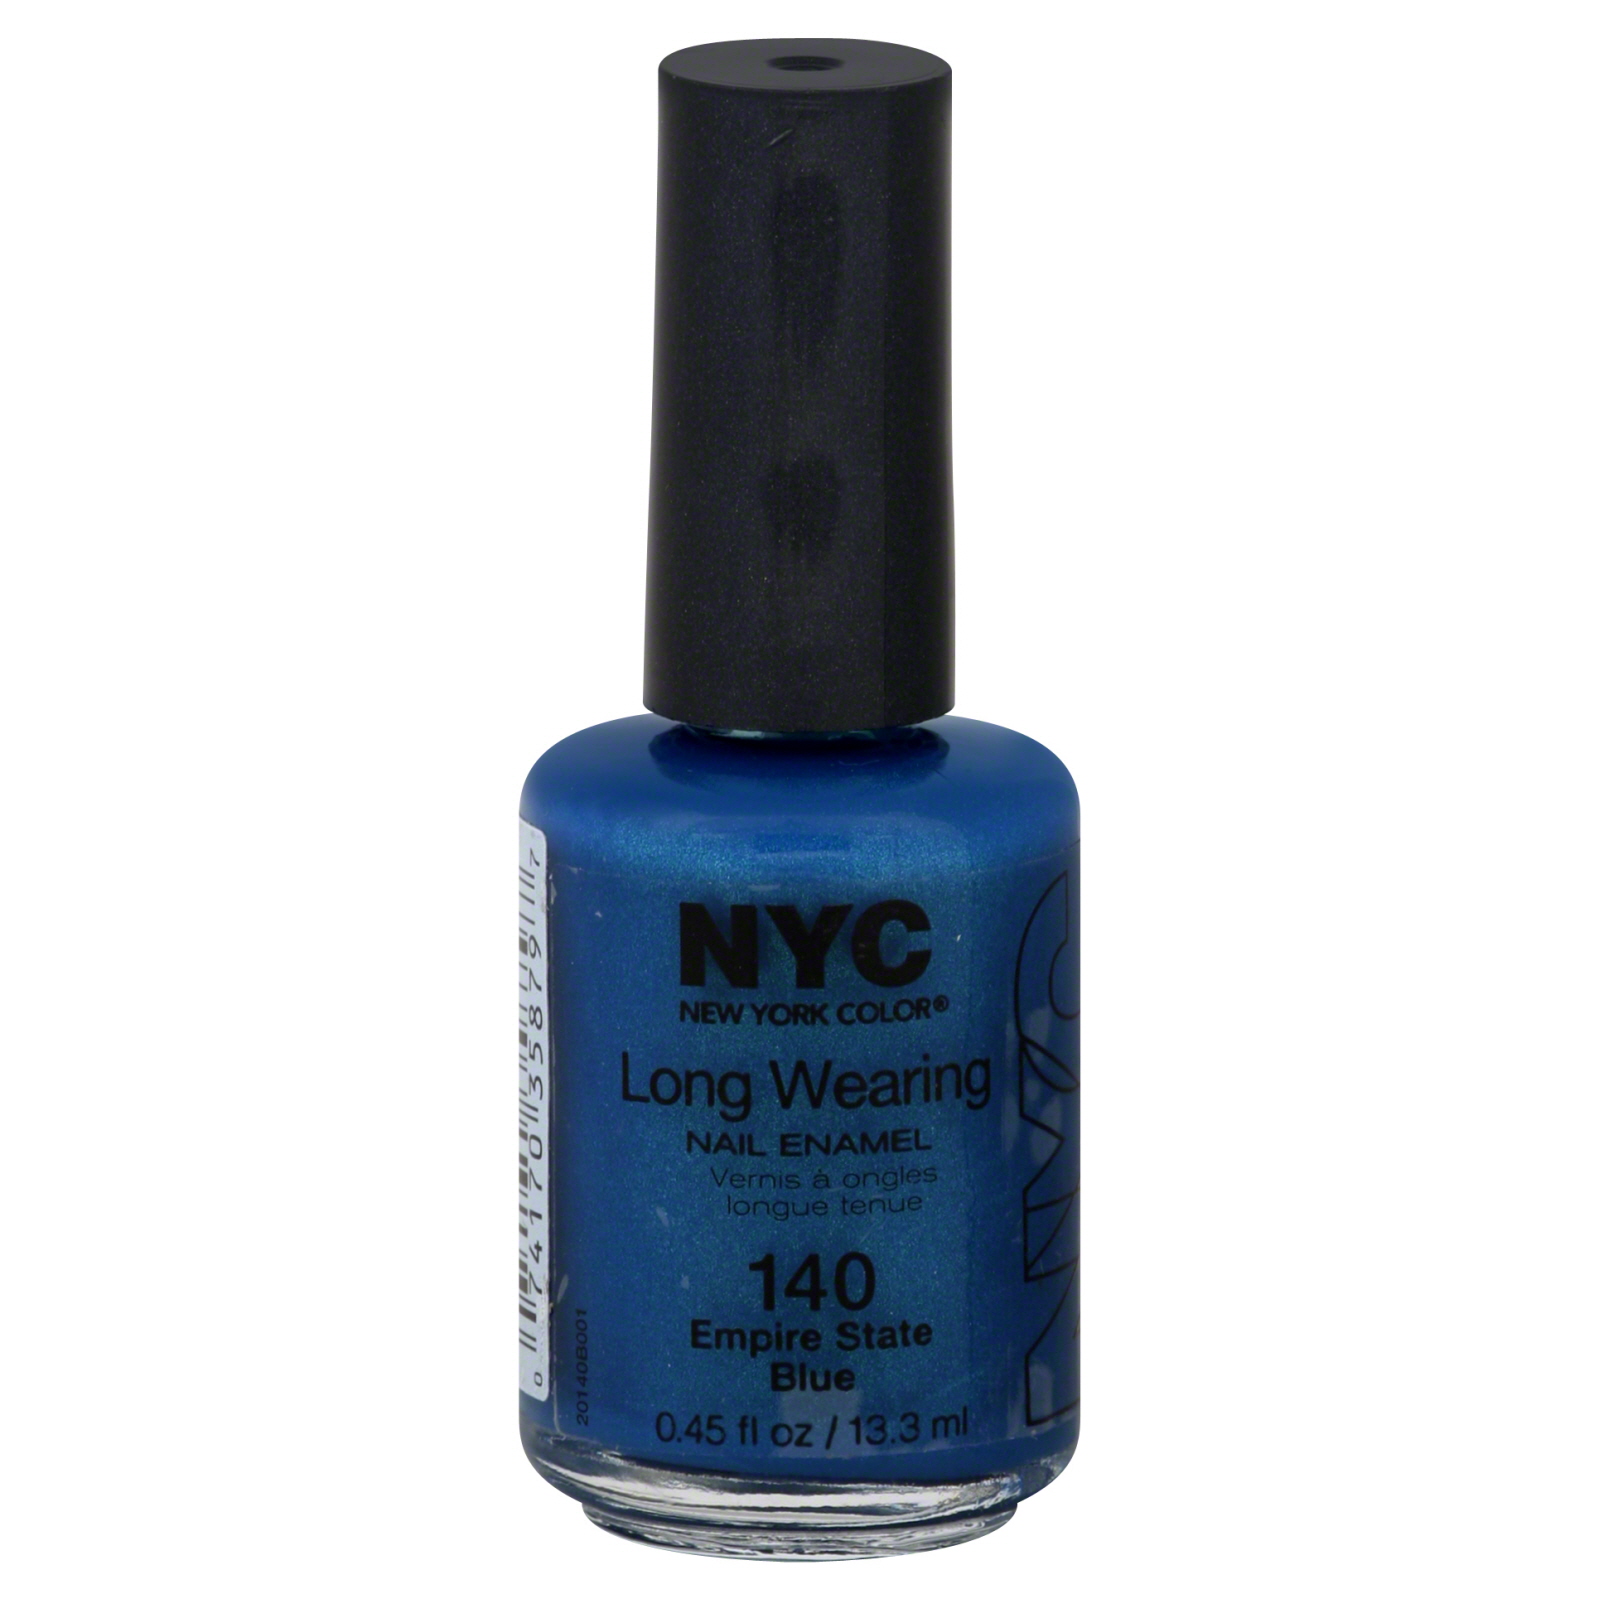 New York Color Nail Enamel, Long Wearing, Empire State Blue 140, 0.45 fl oz (13.3 ml)